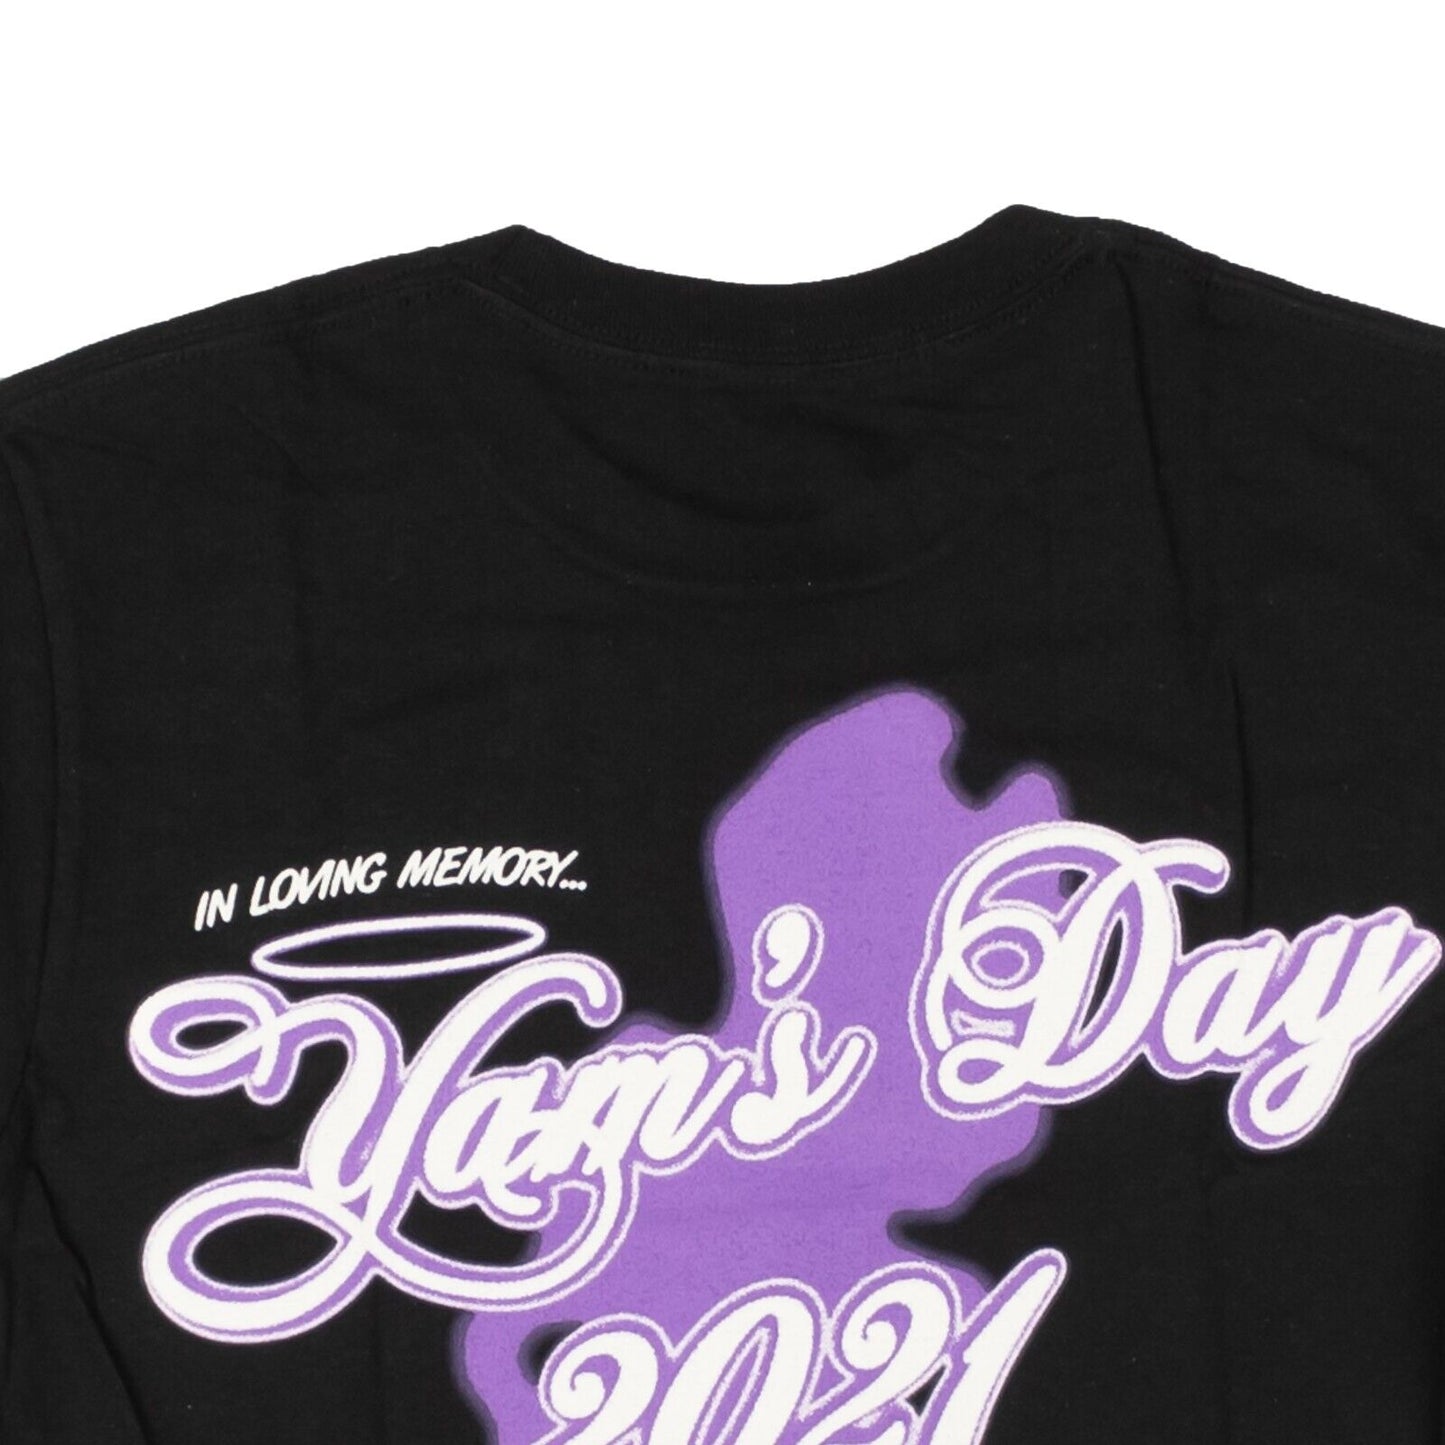 Yams Day X Psychworld 2021 Loving Memory T-Shirt - Black